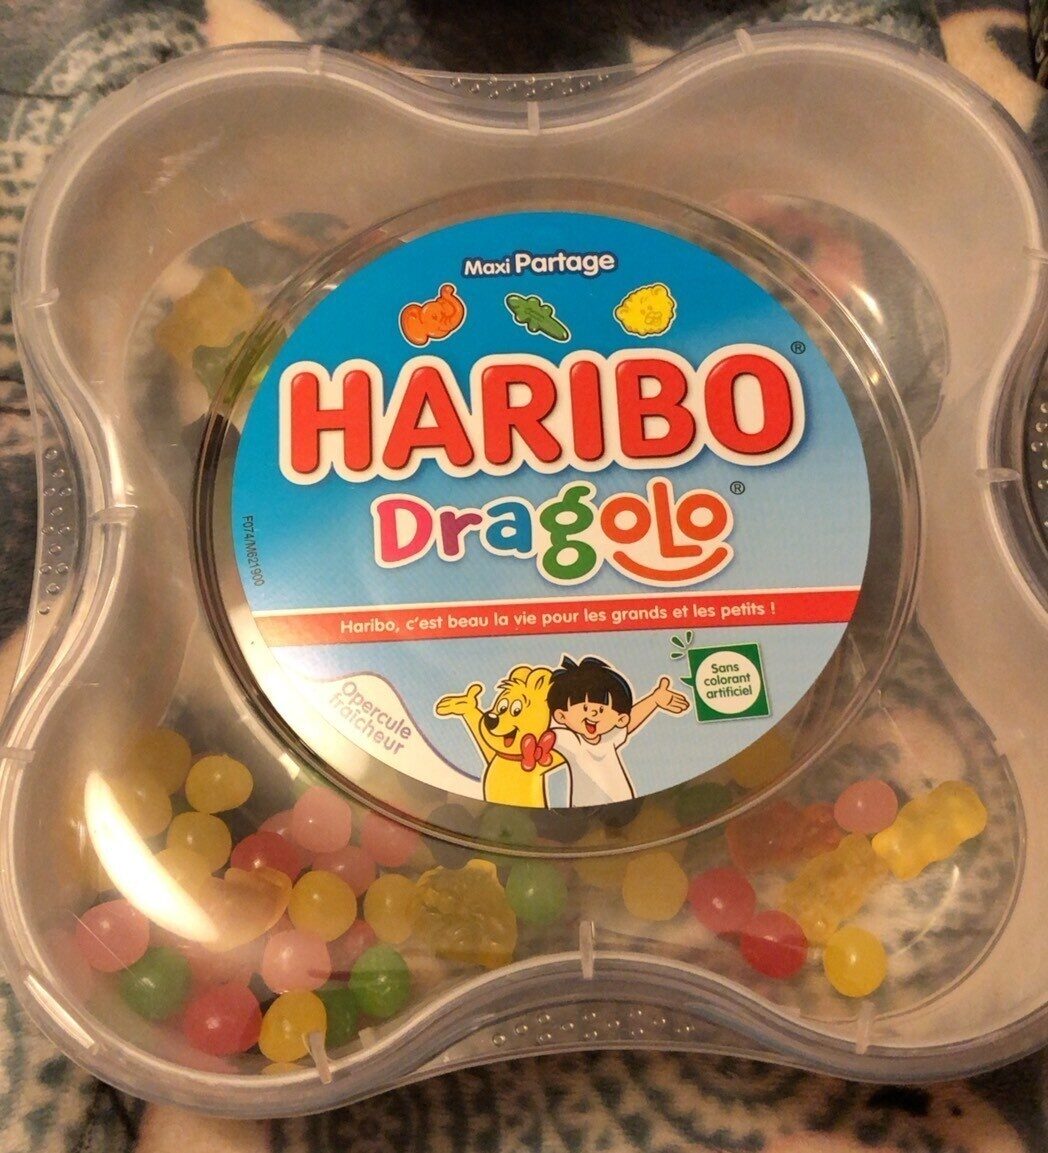 Haribo dragolo - Product - fr